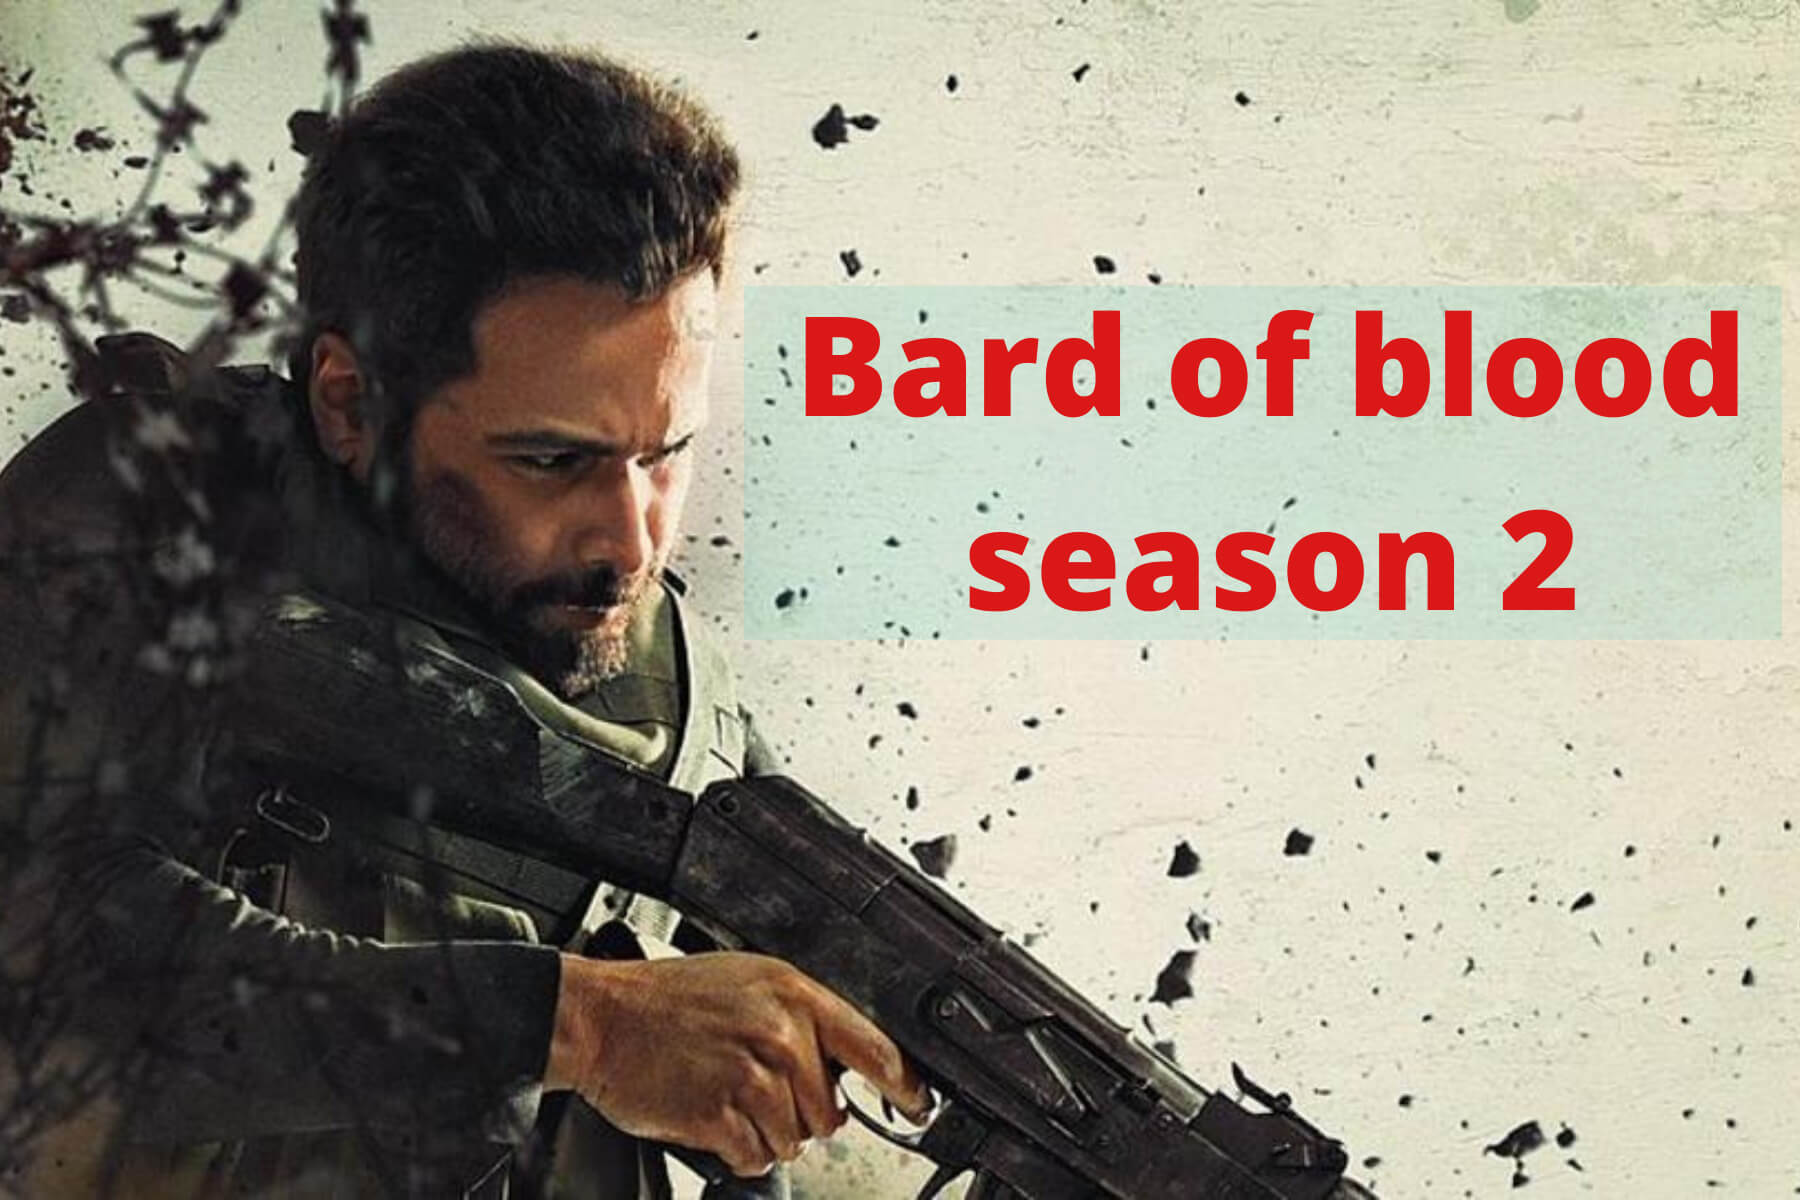 Bard of blood season 2